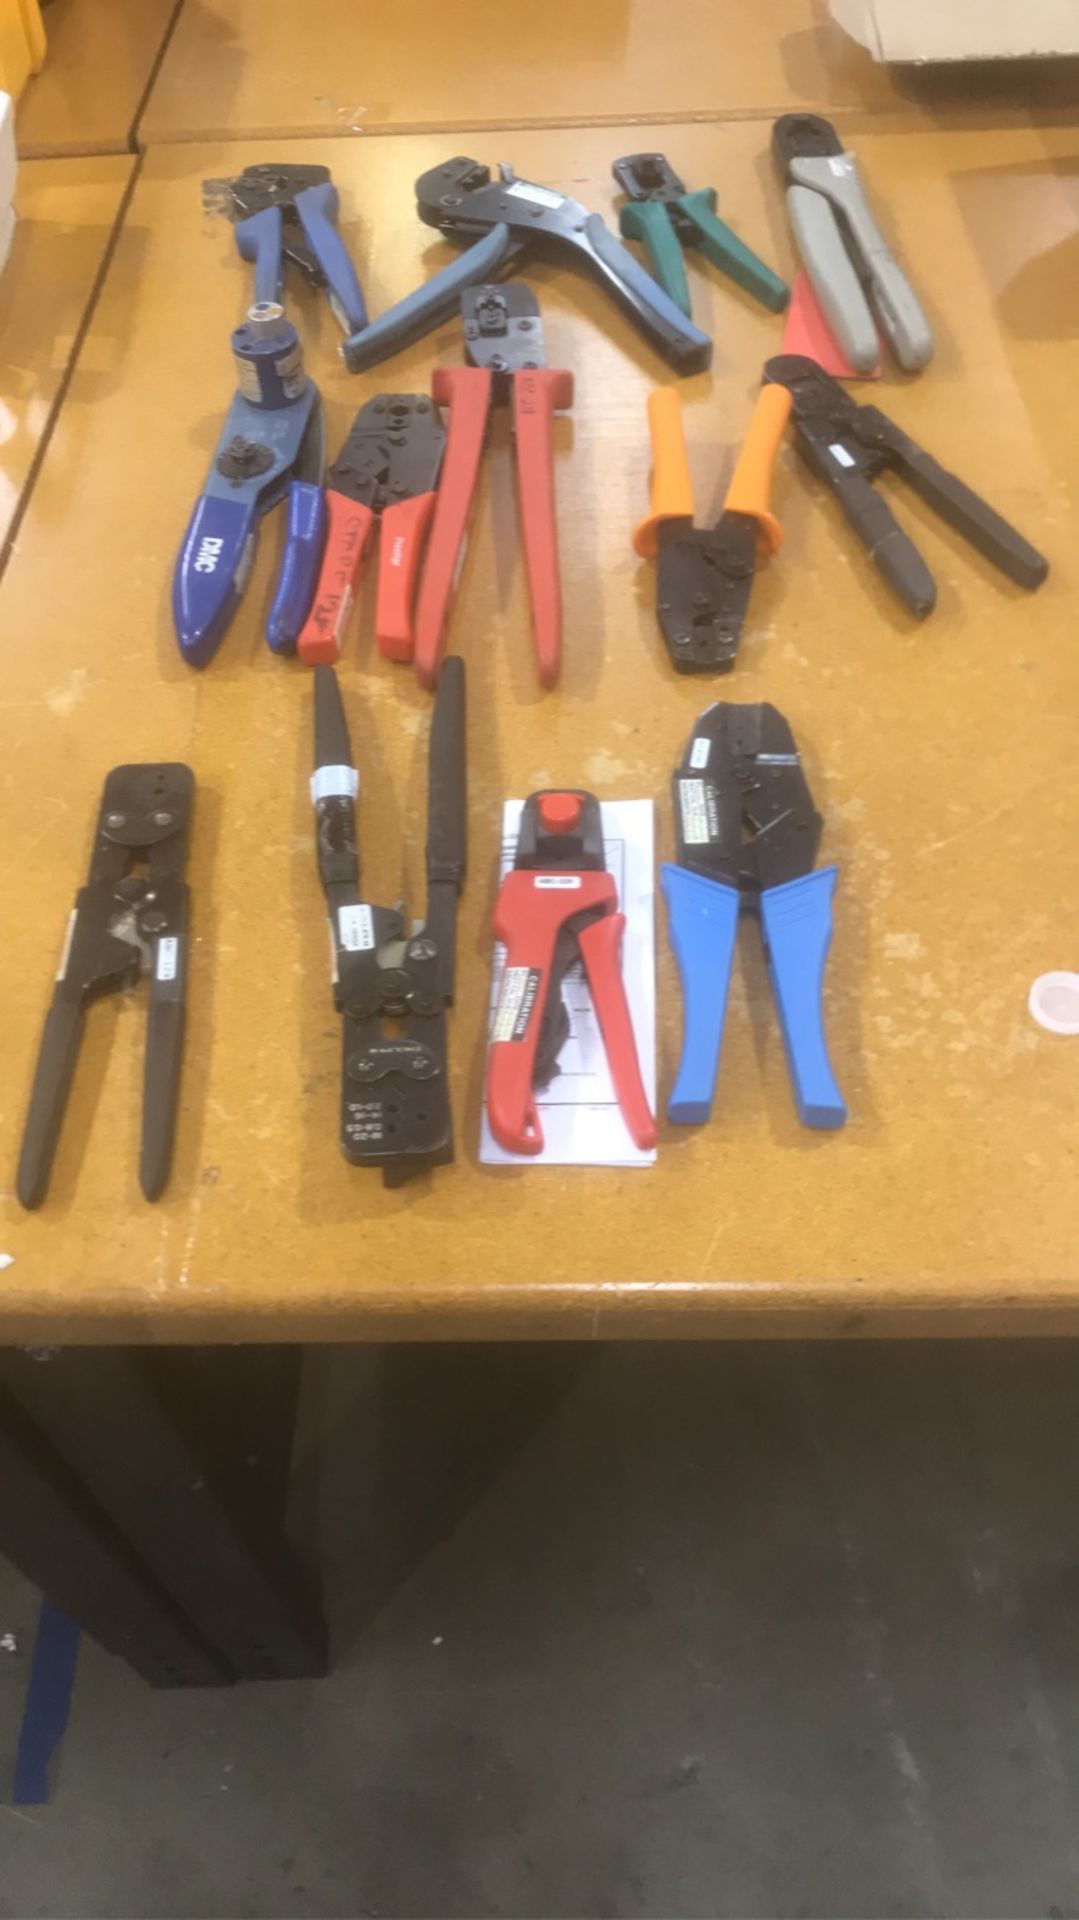 Hand tools: strippers, crimpers, from AMP, Molex, Delphi, Presige, & JST